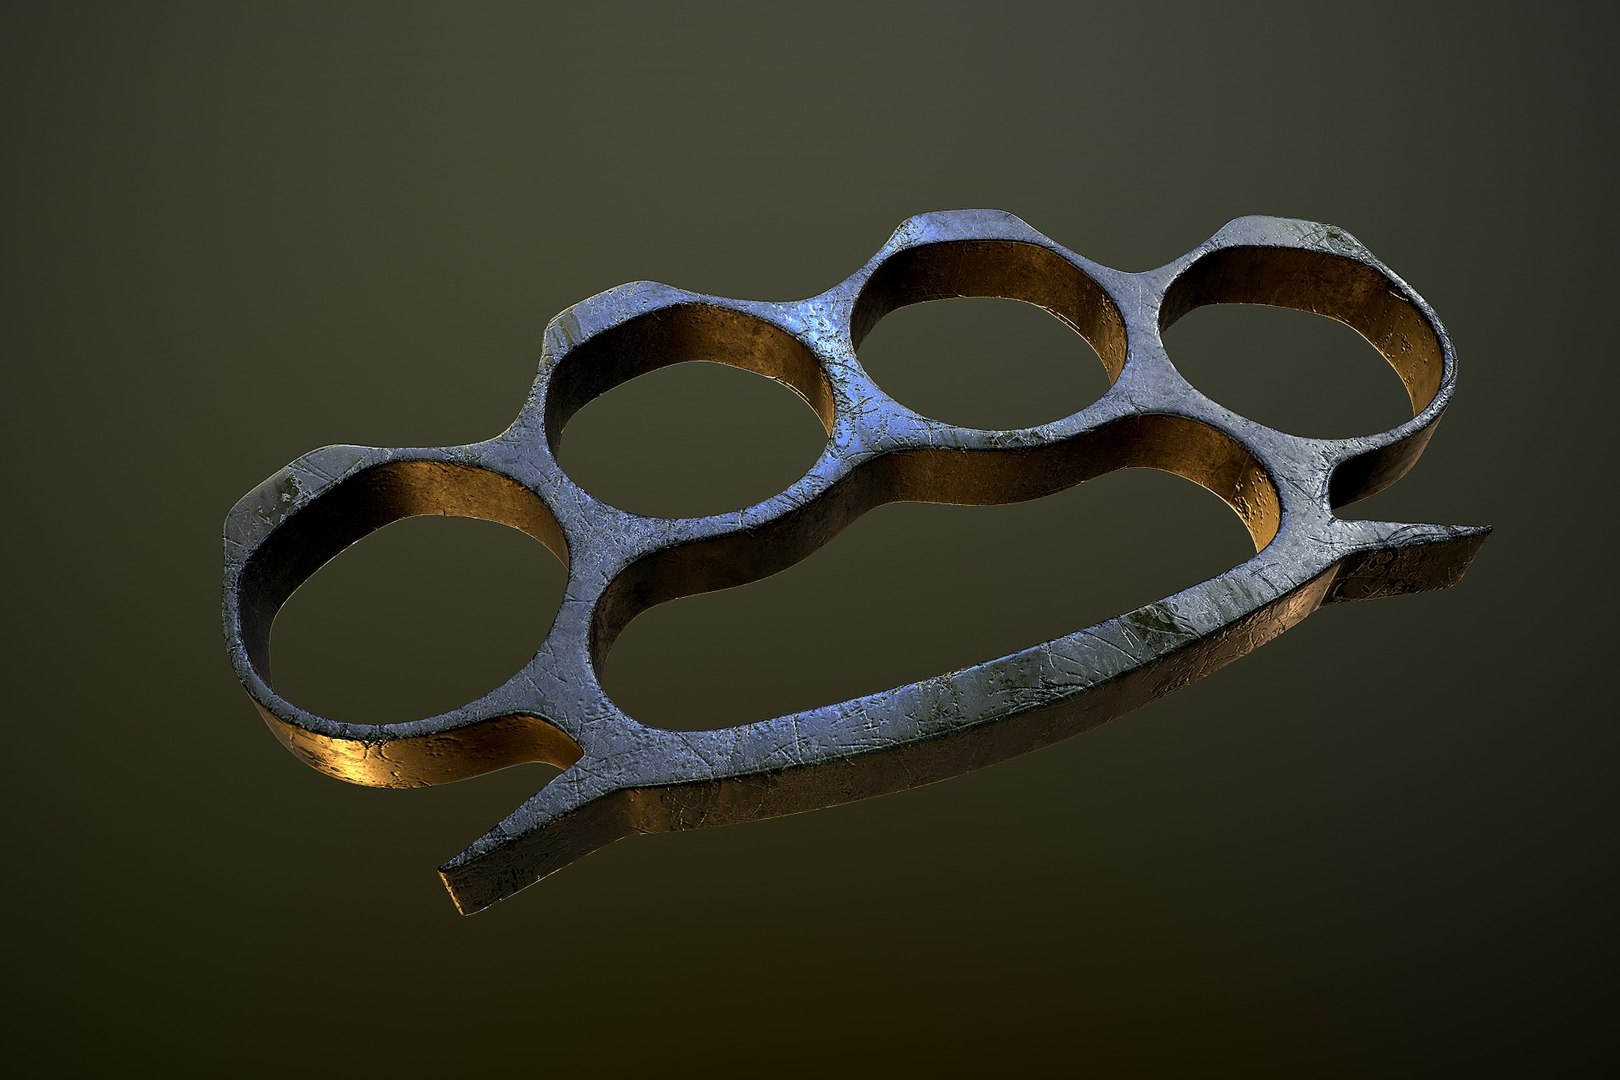 spiked brass knuckles 3D model 3D printable